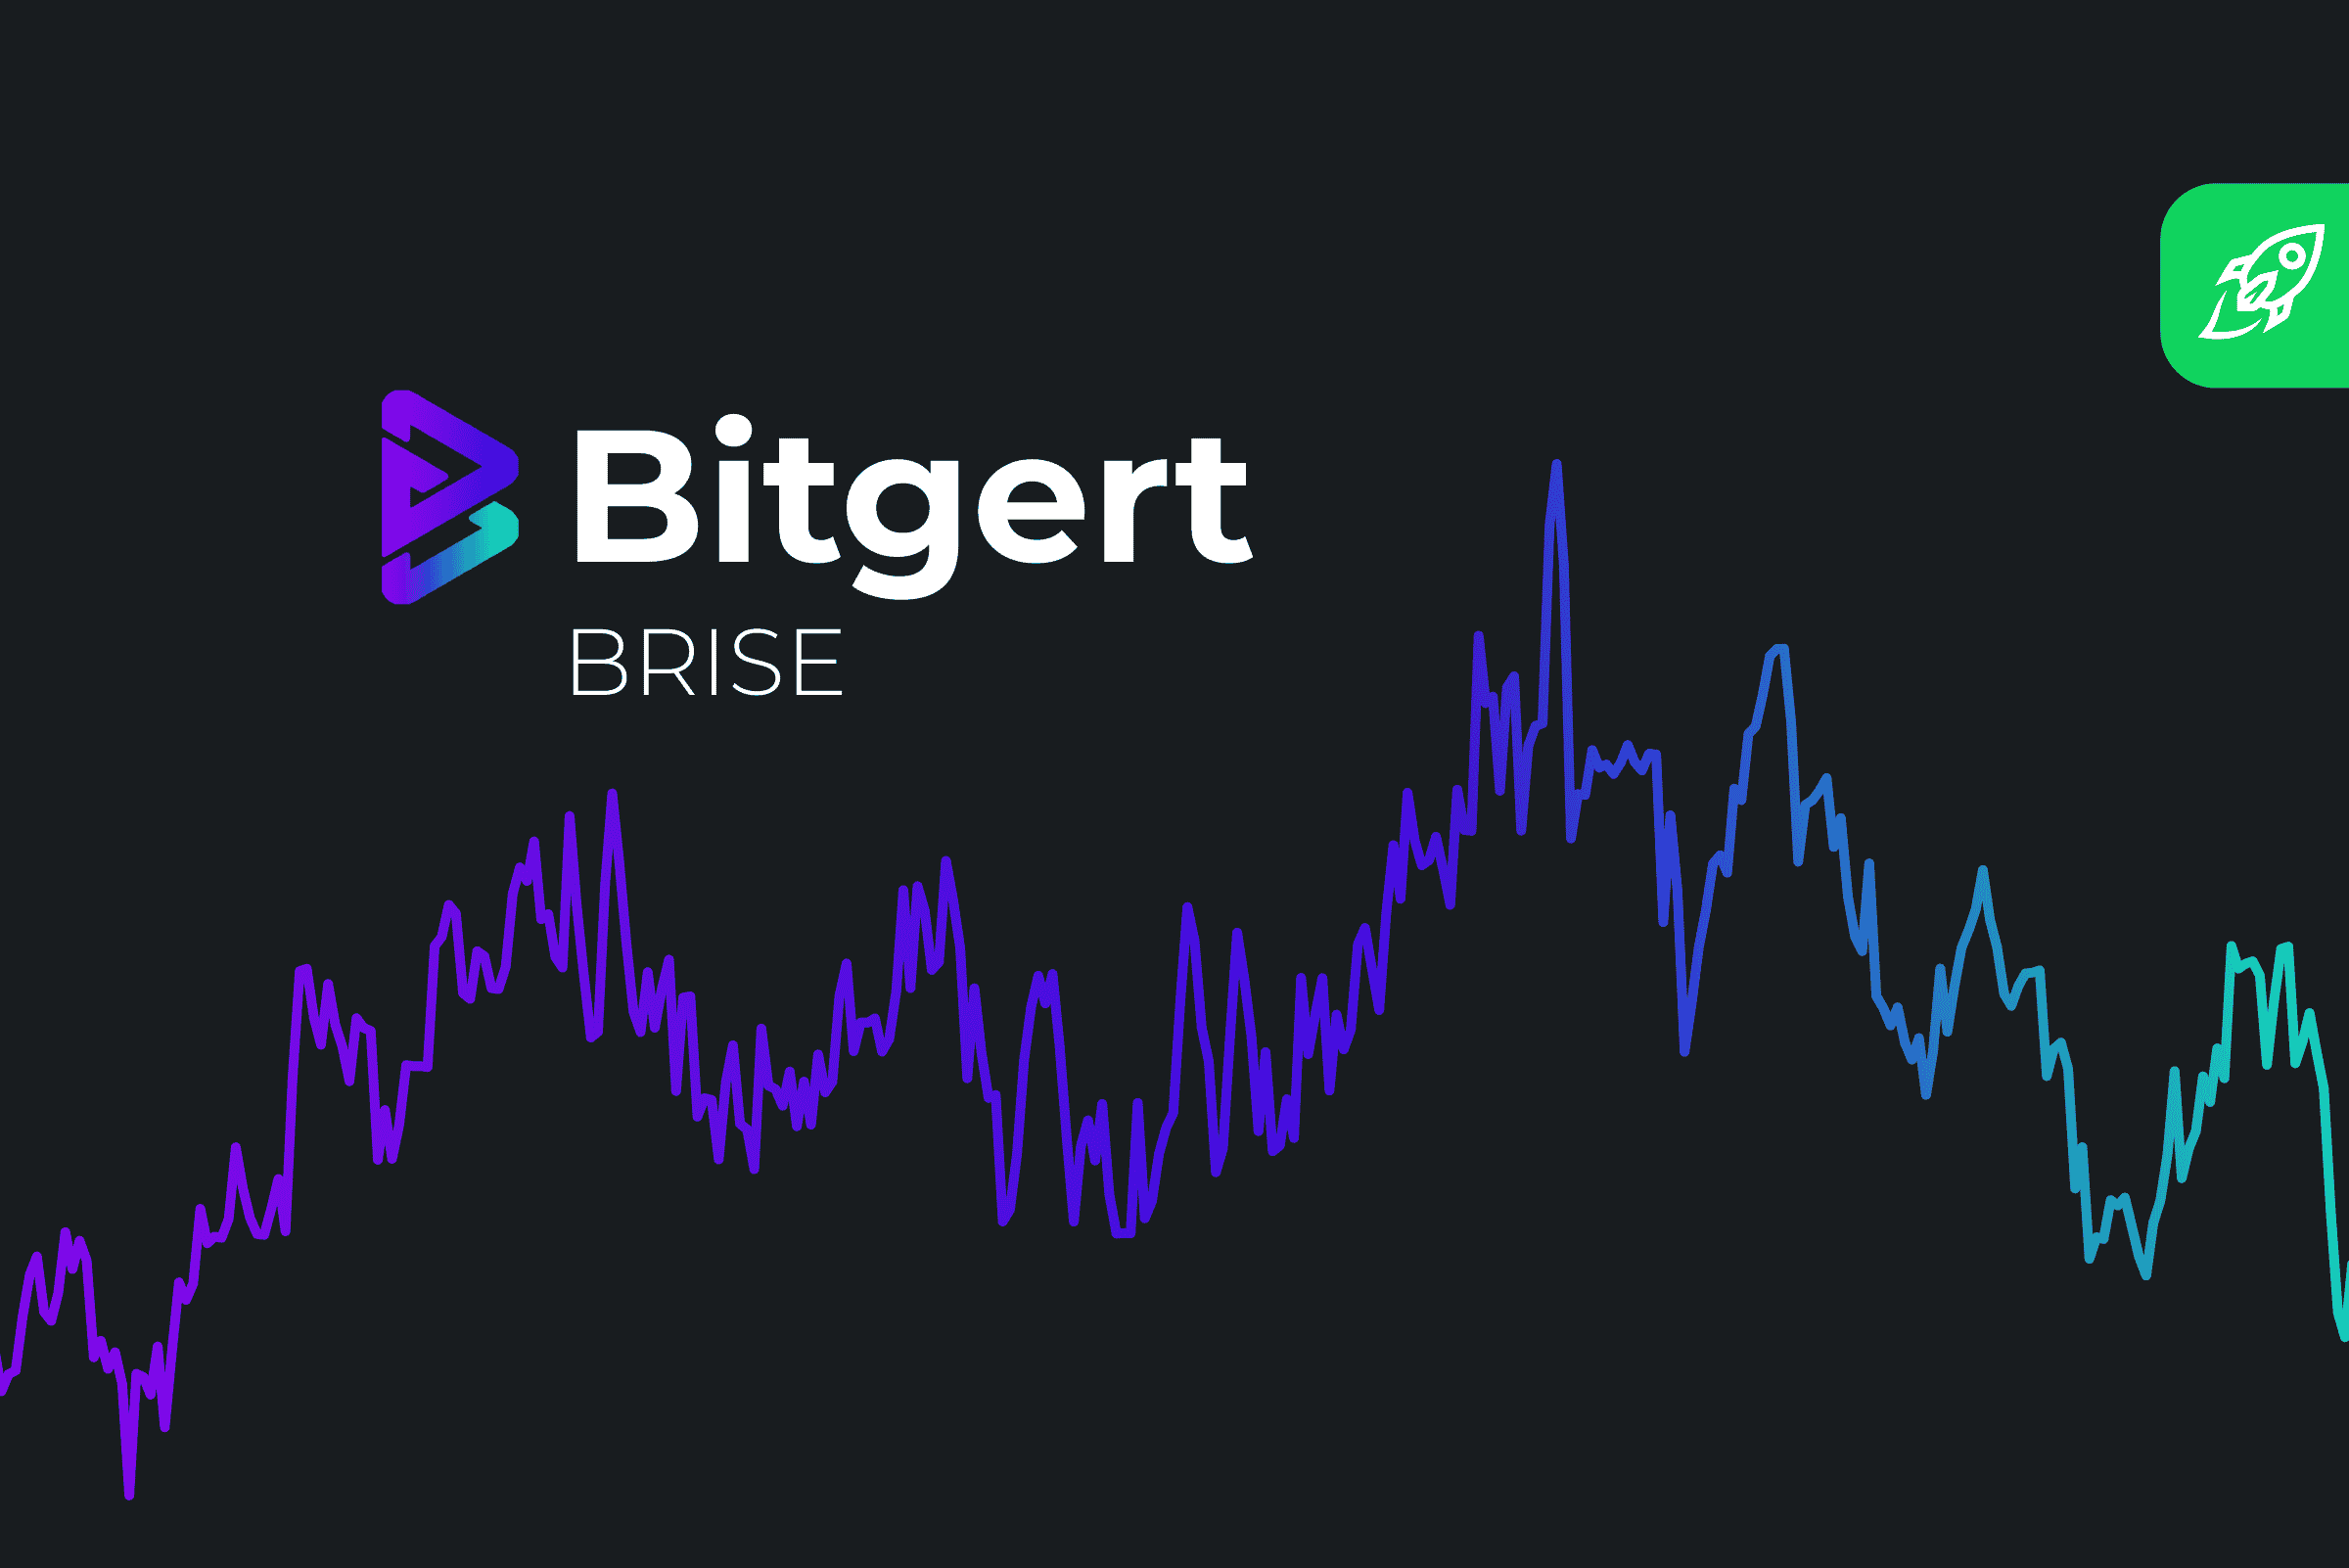 Bitgert on crypto.com safemoon crypto current price